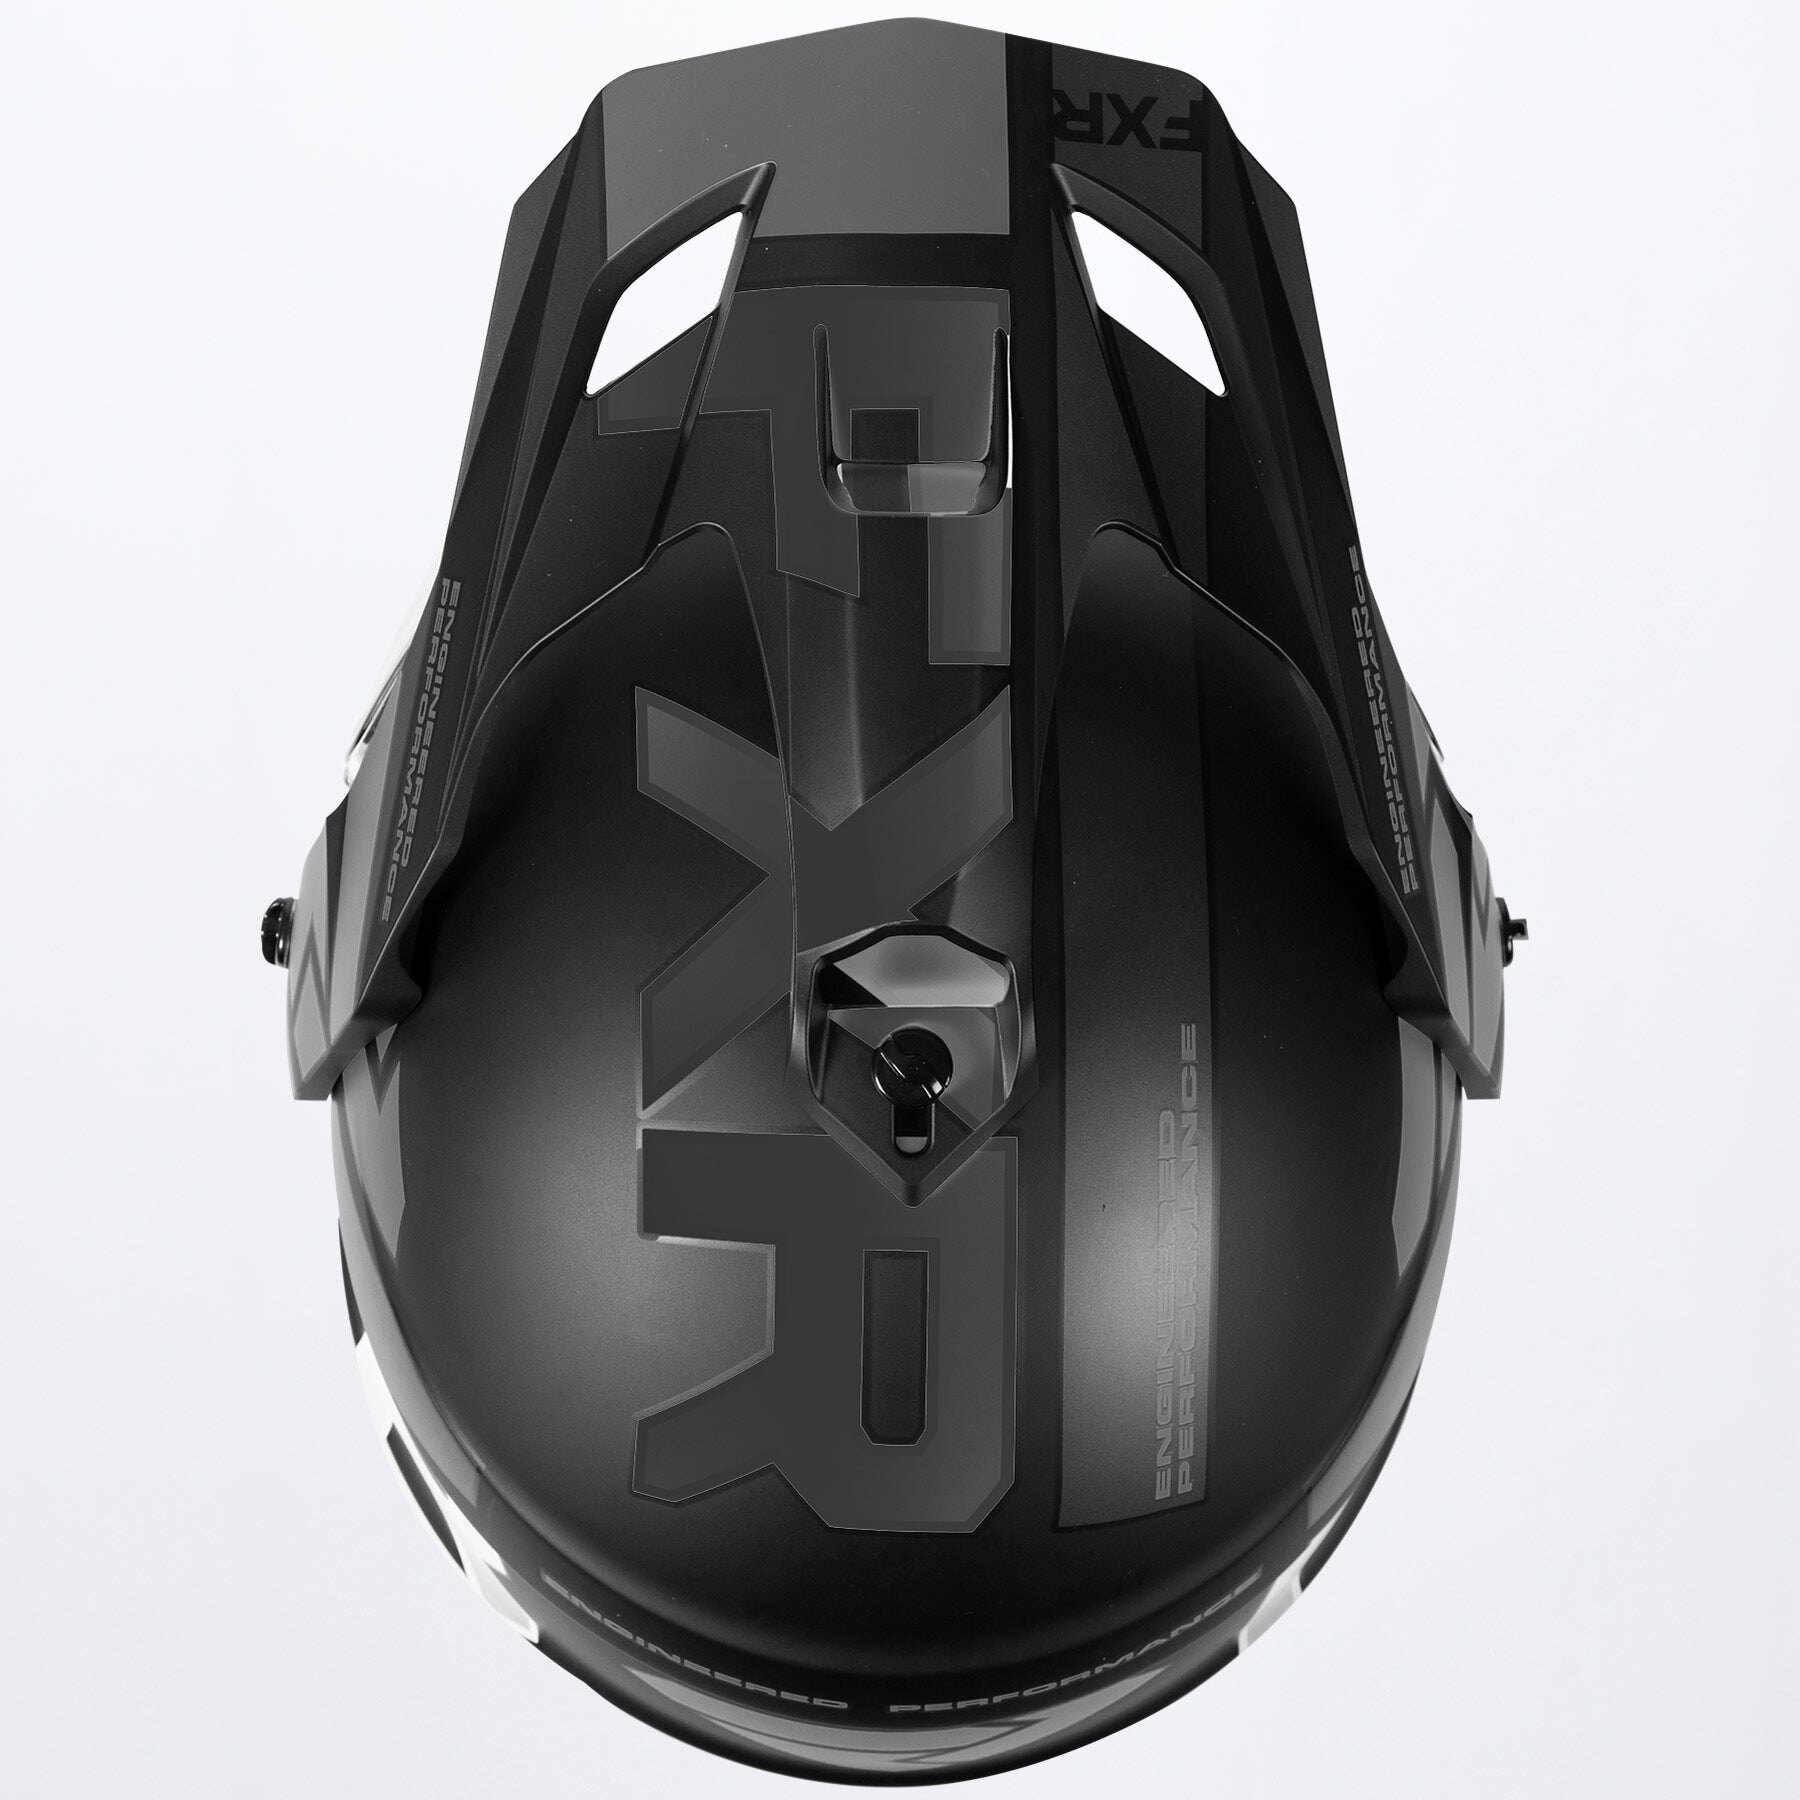 Torque X Evo Helmet with Electric Shield